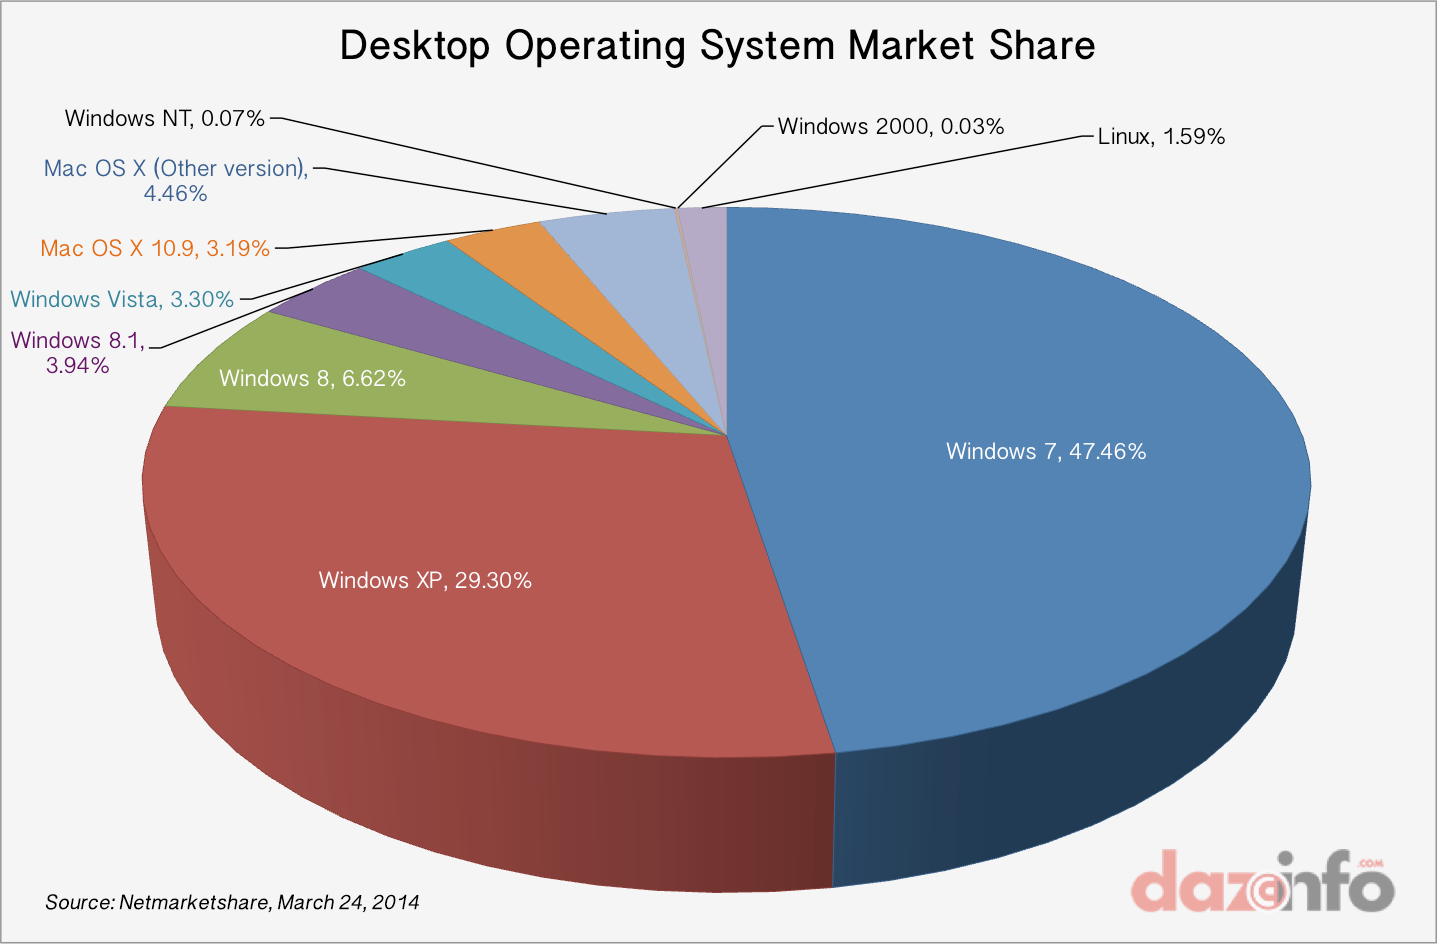 Desktop Operating System Market Share, March 2014